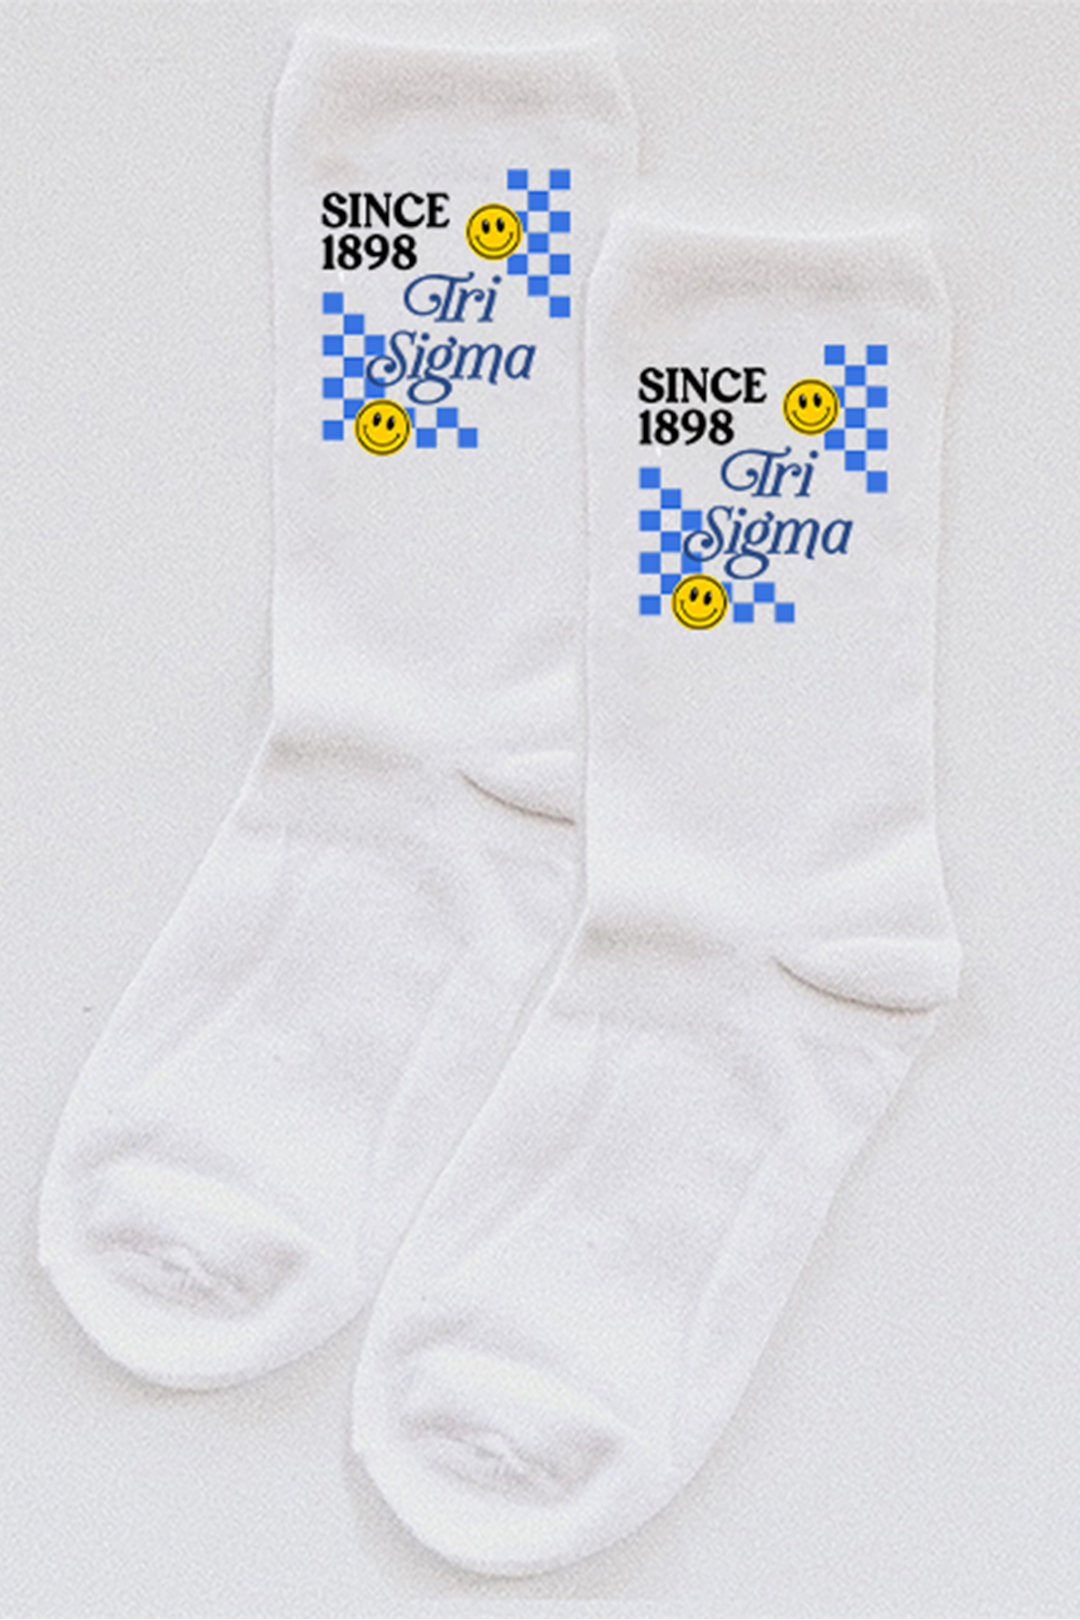 Blue Checkered socks - Tri Sigma